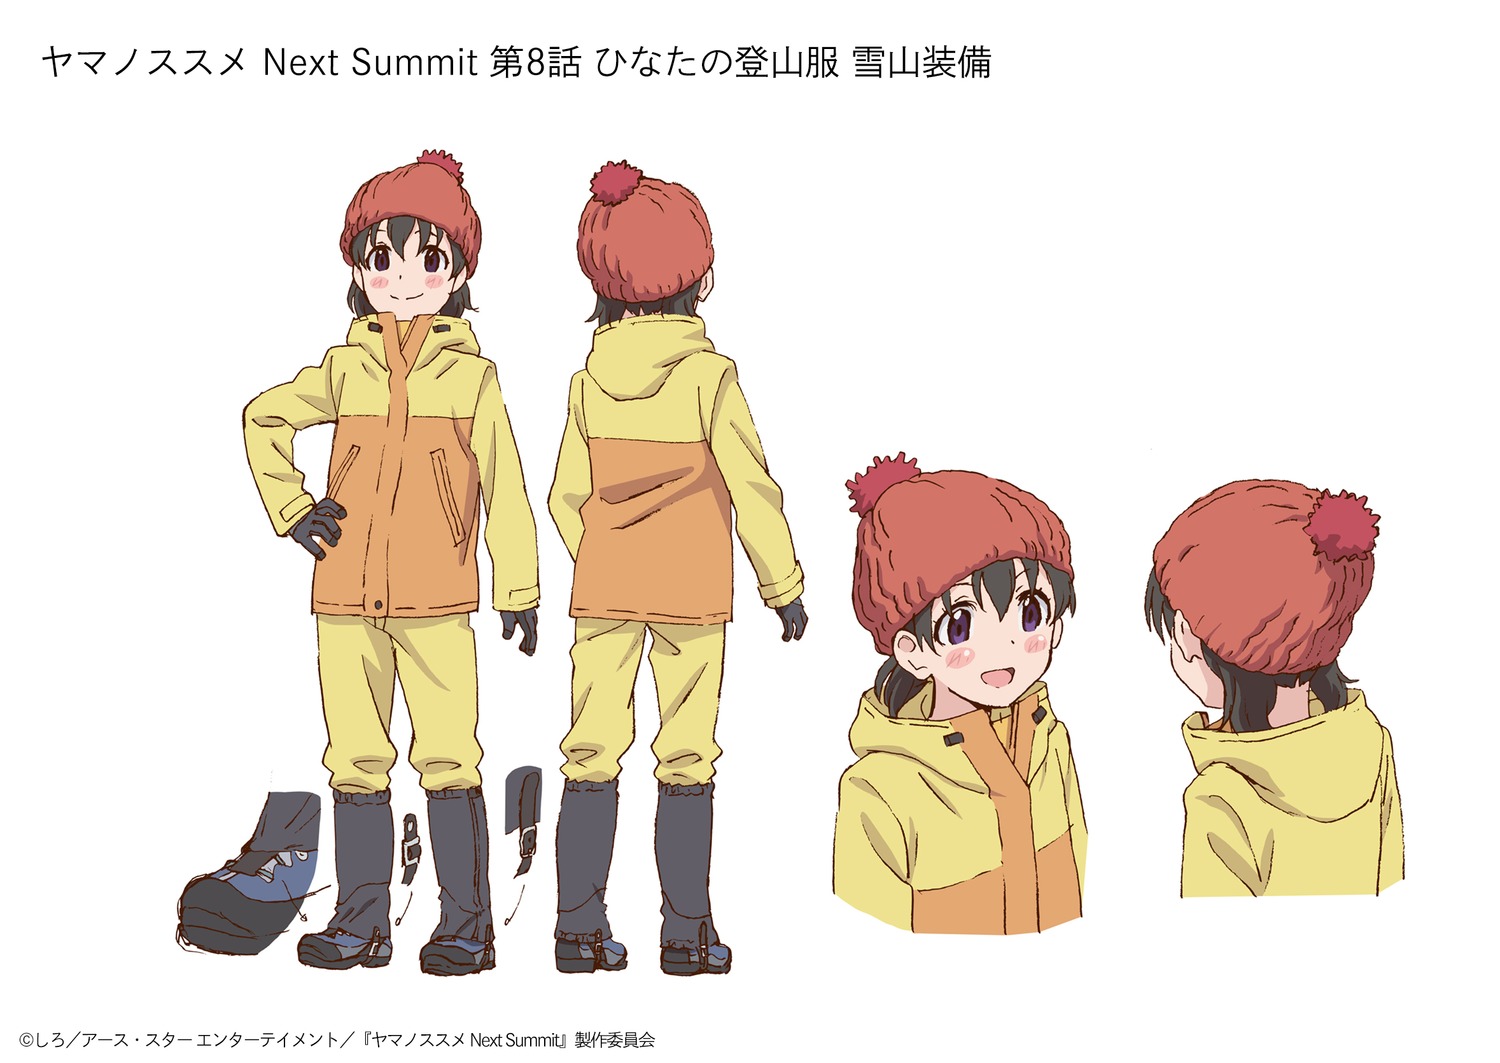 atsushi_irie character_design production_materials settei yama_no_susume:_next_summit yama_no_susume_series